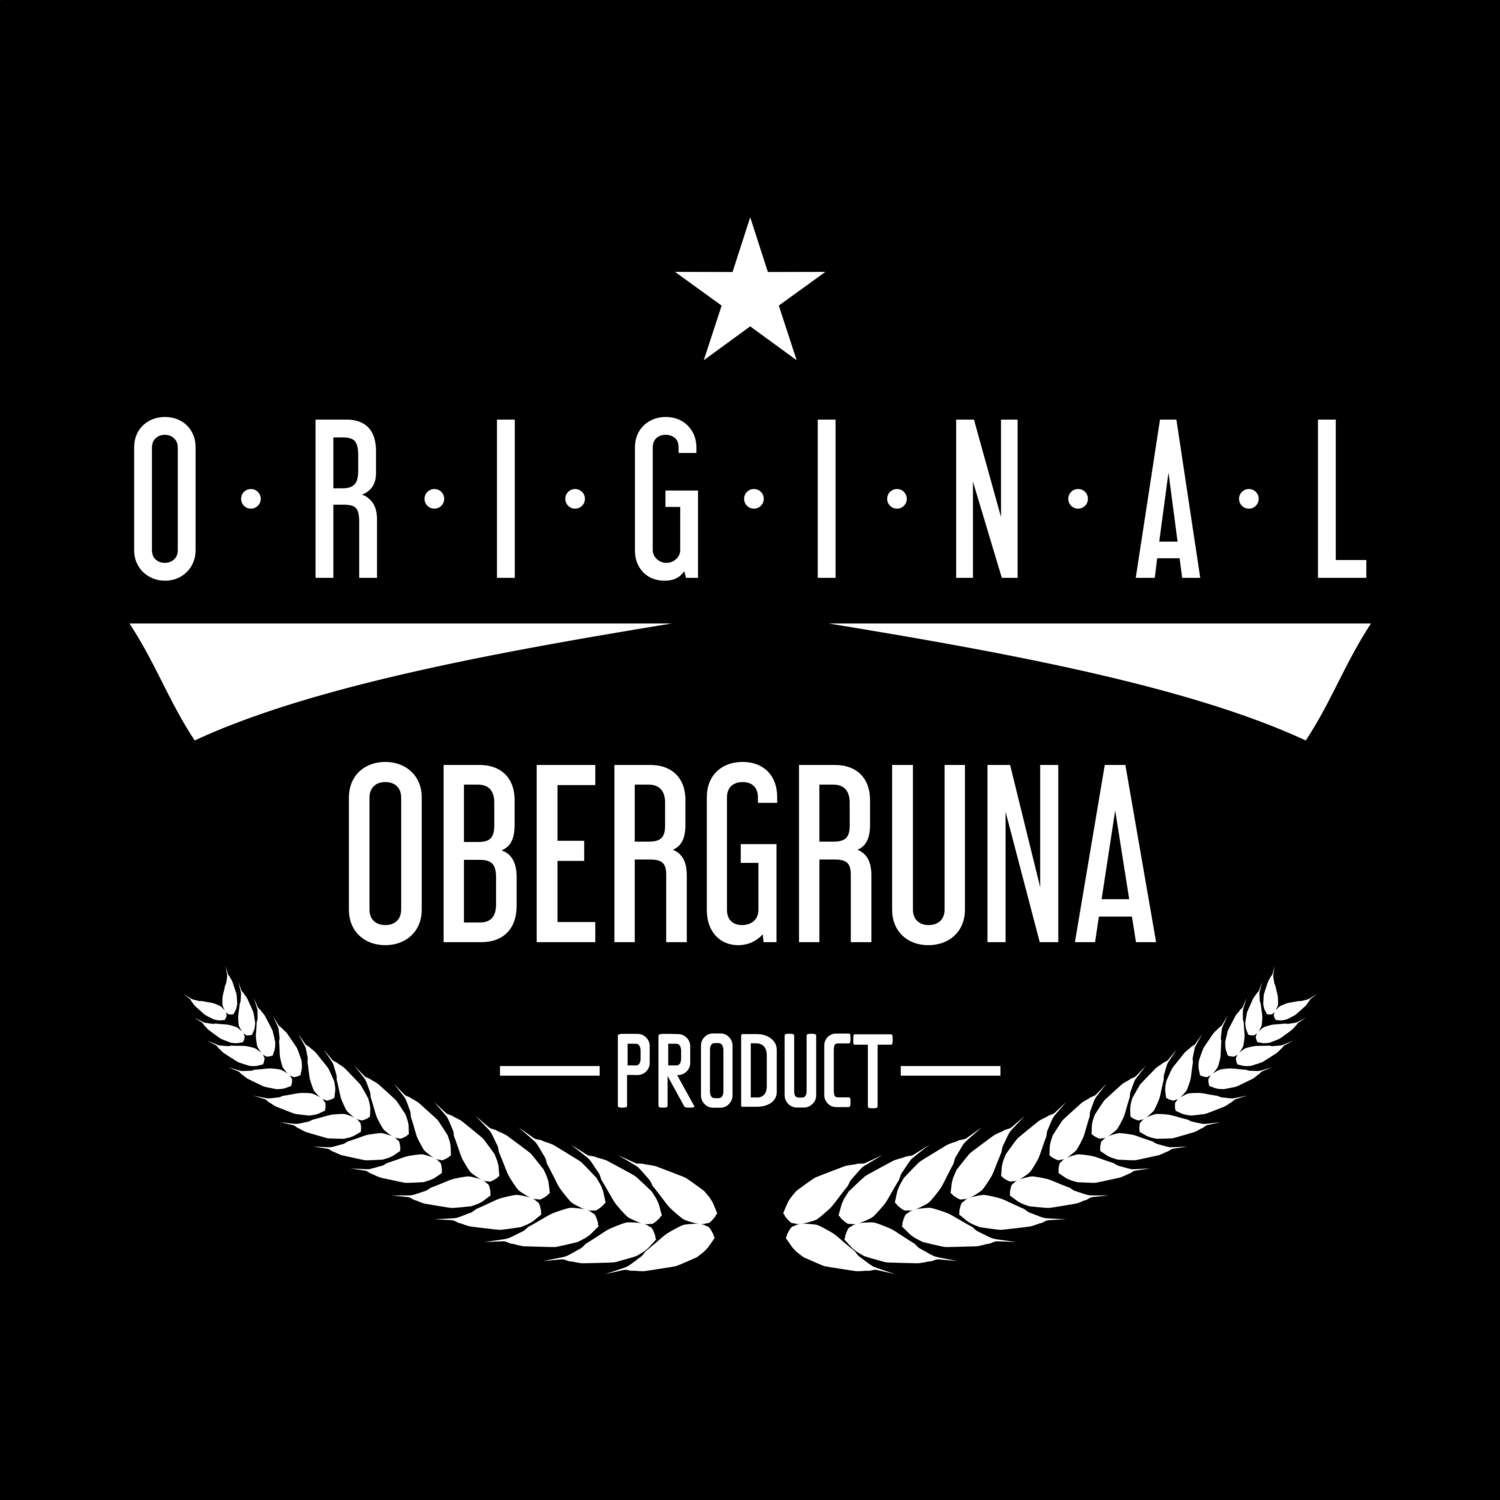 Obergruna T-Shirt »Original Product«